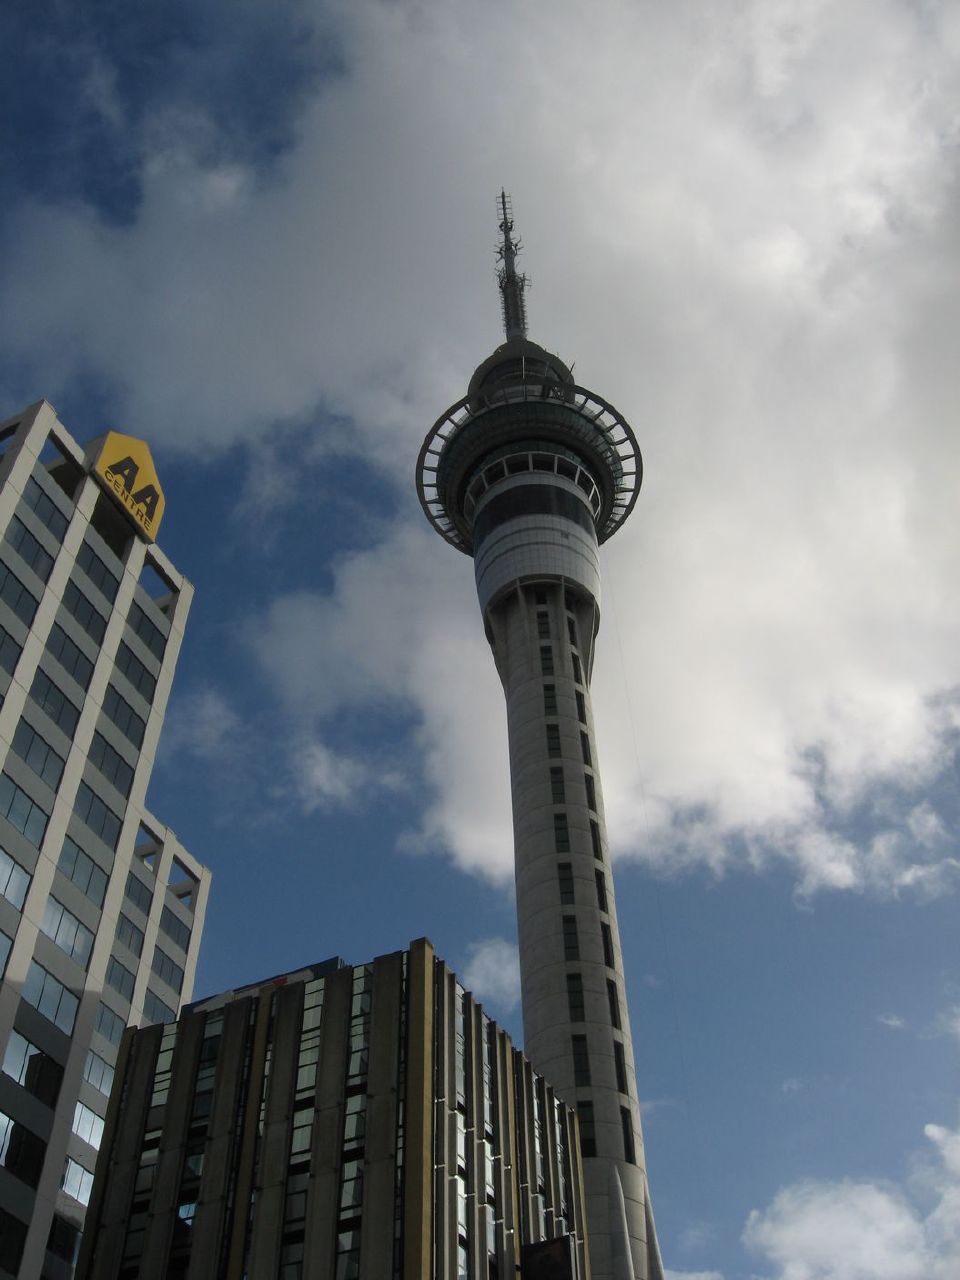 Auckland 3